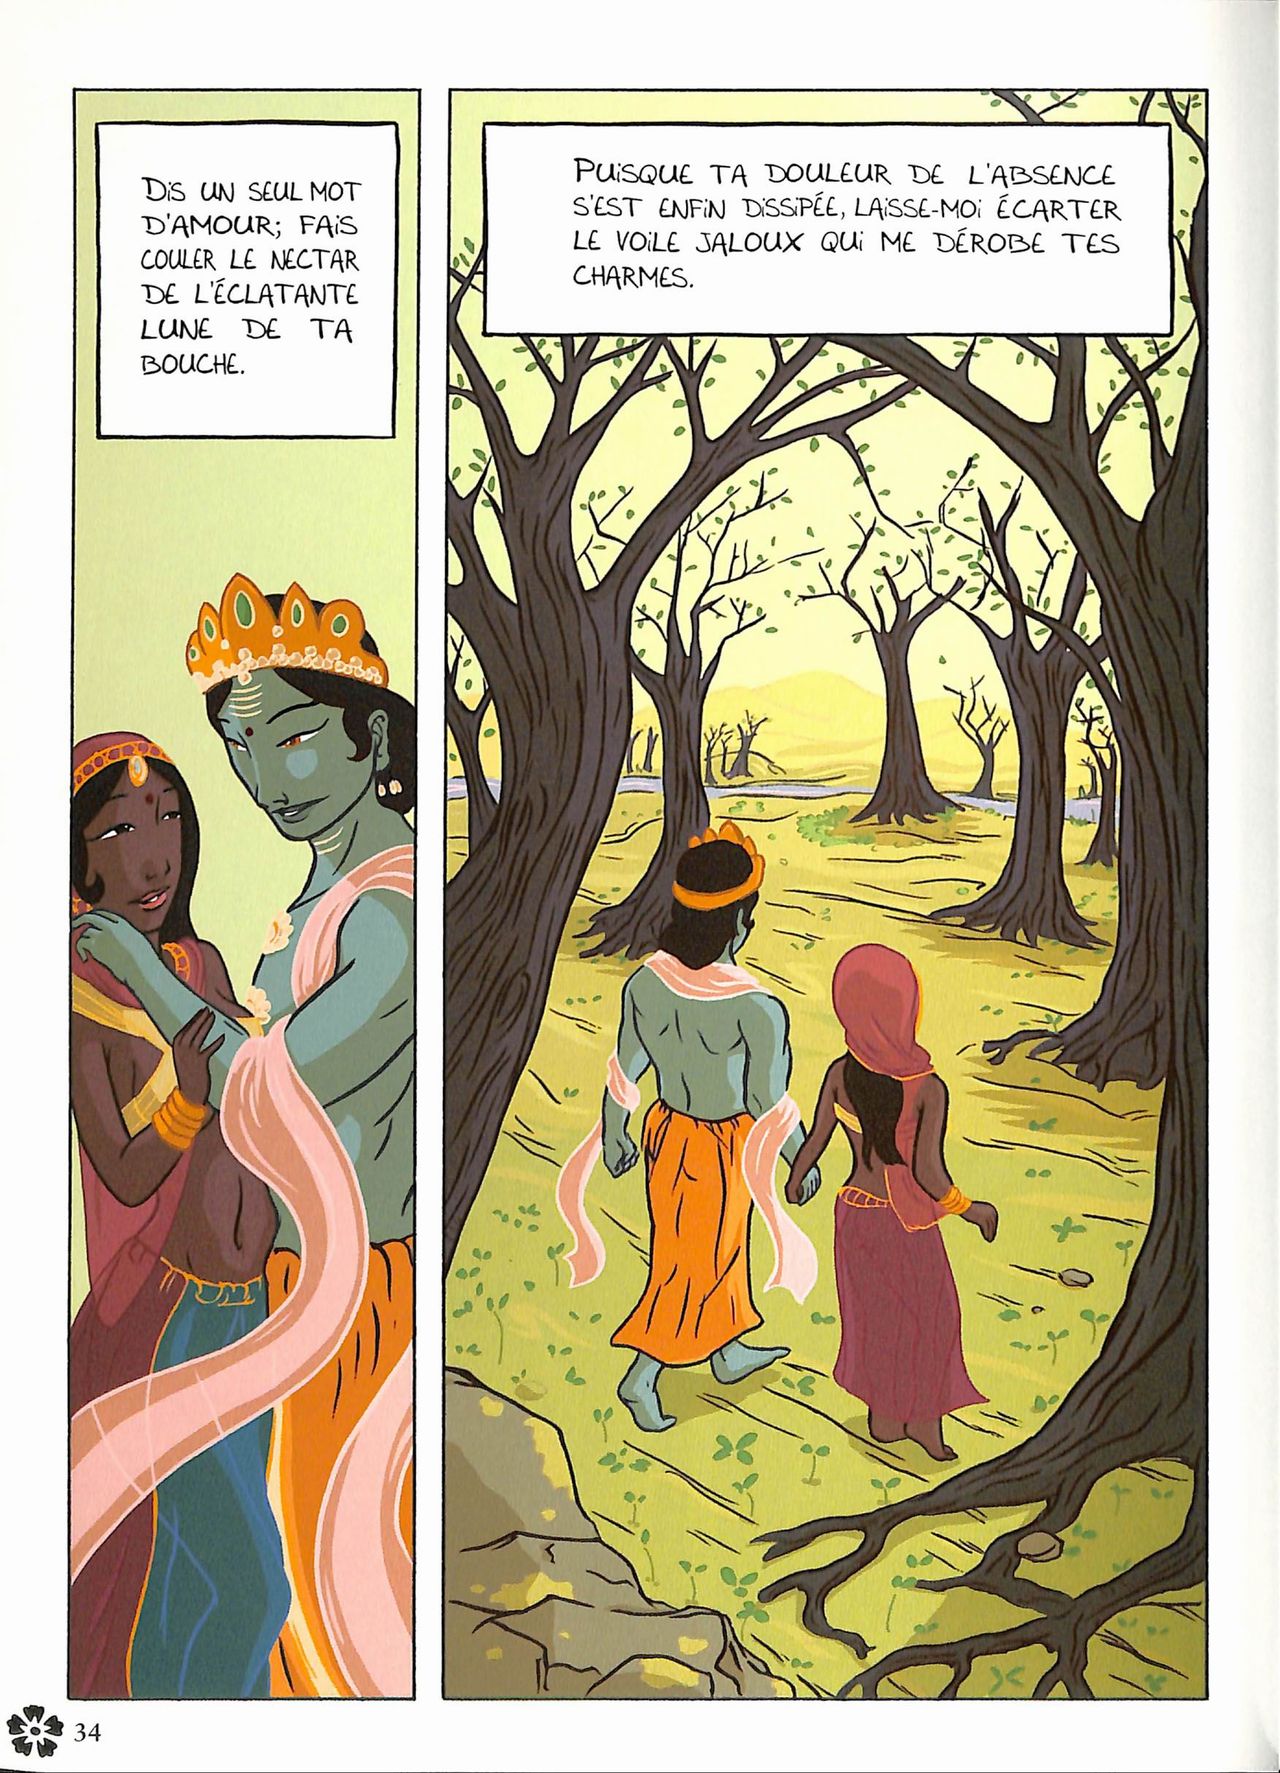 Kama Sutra en bandes dessinées - Kama Sutra with Comics numero d'image 35